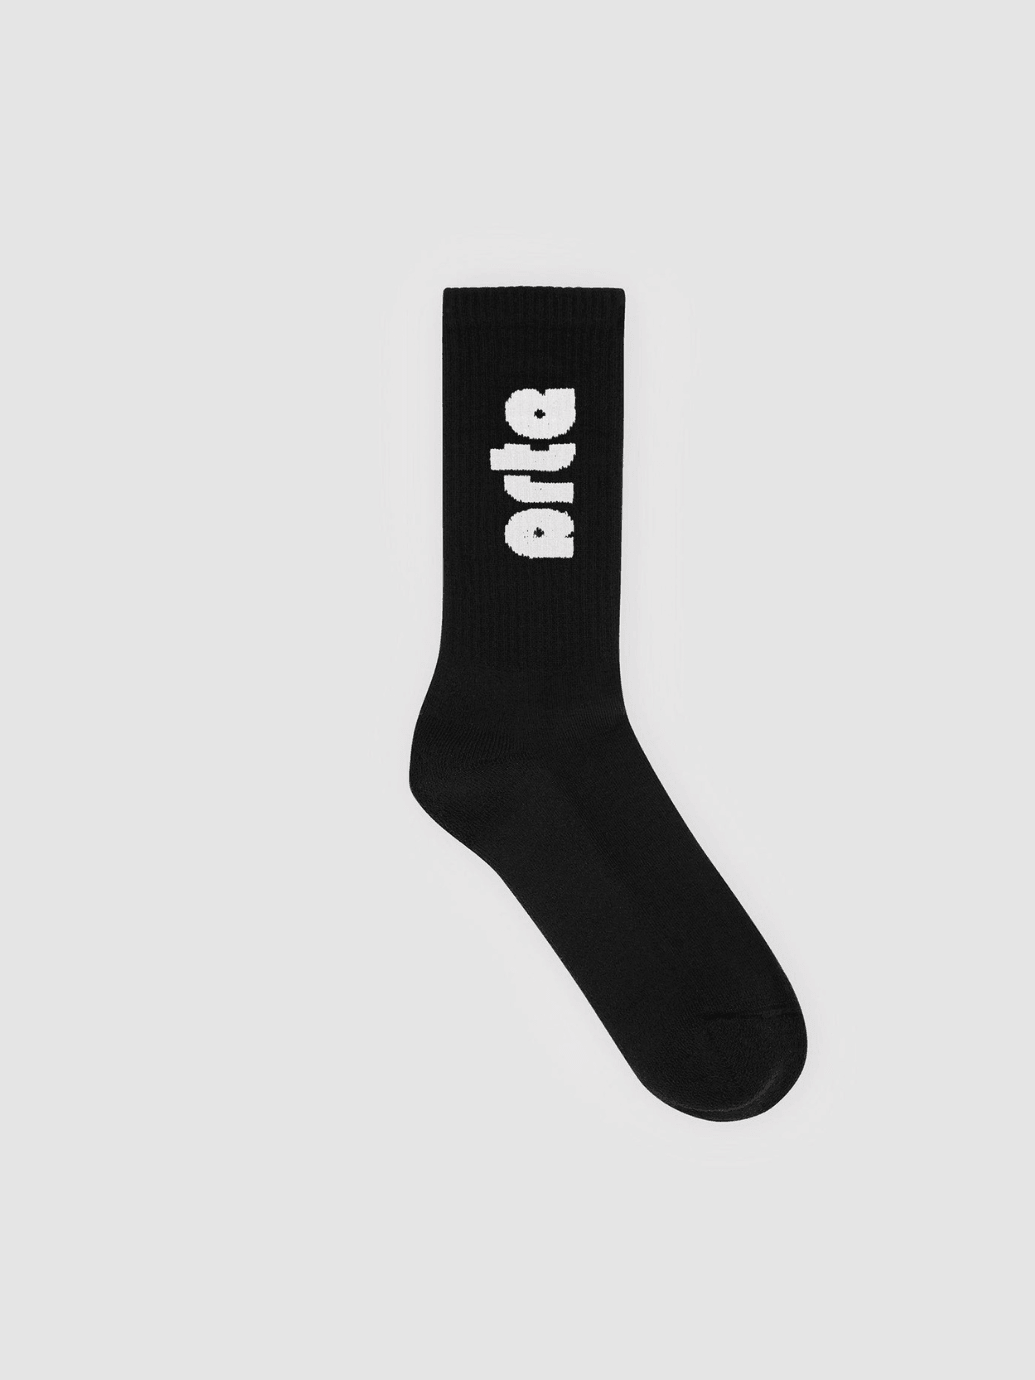 Arte Bau Logo Socks - Throw.Store